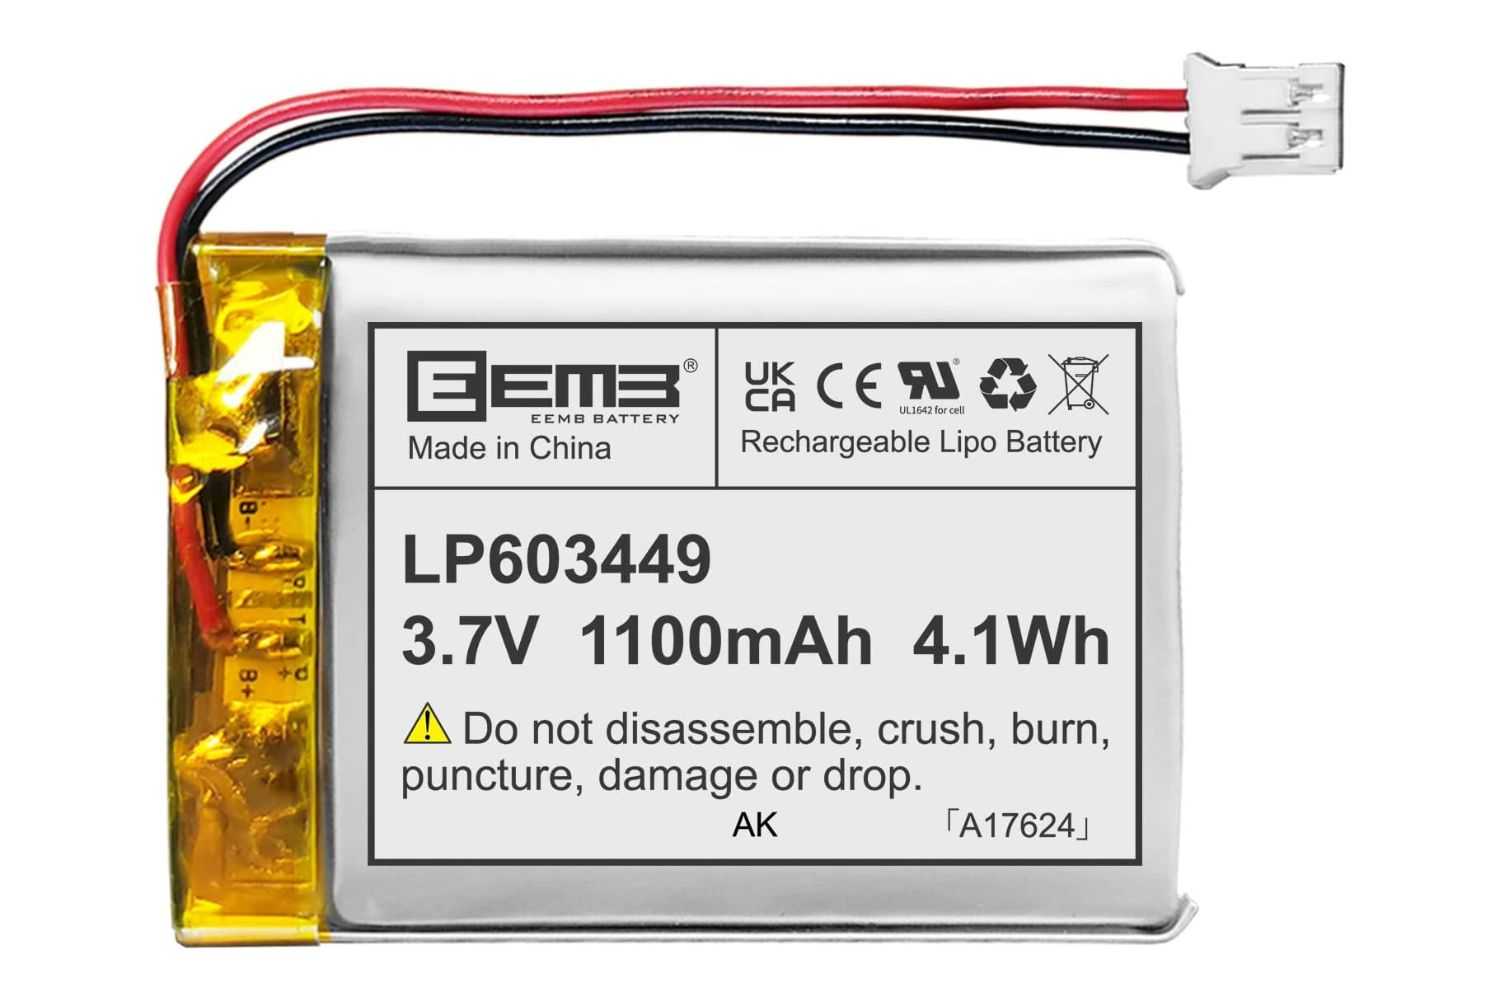 Li-Pol (Lithium-Polymer) batteries